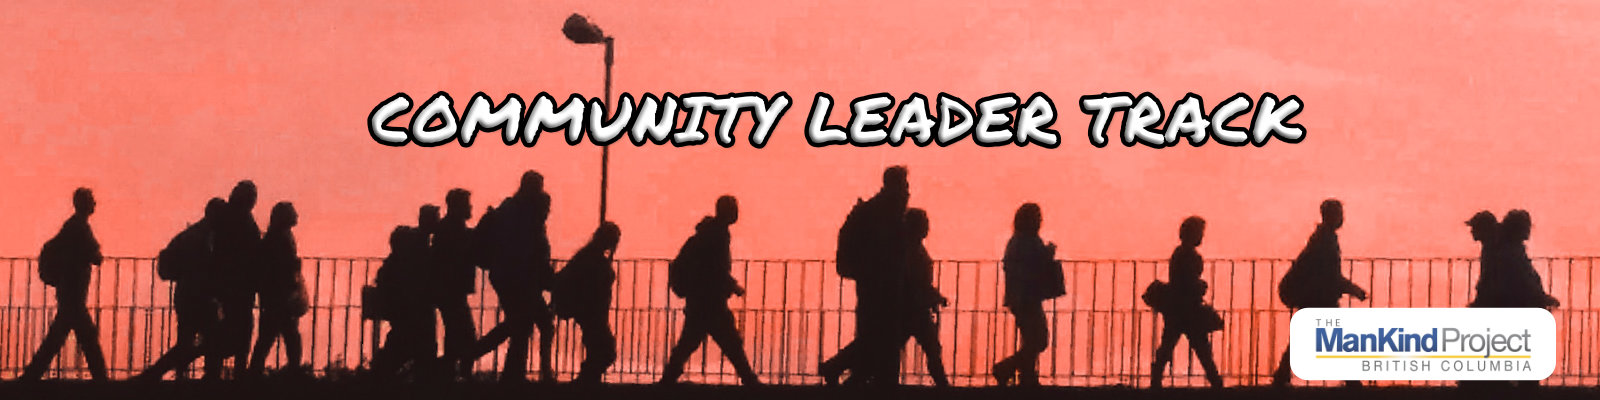 Community Leader Track